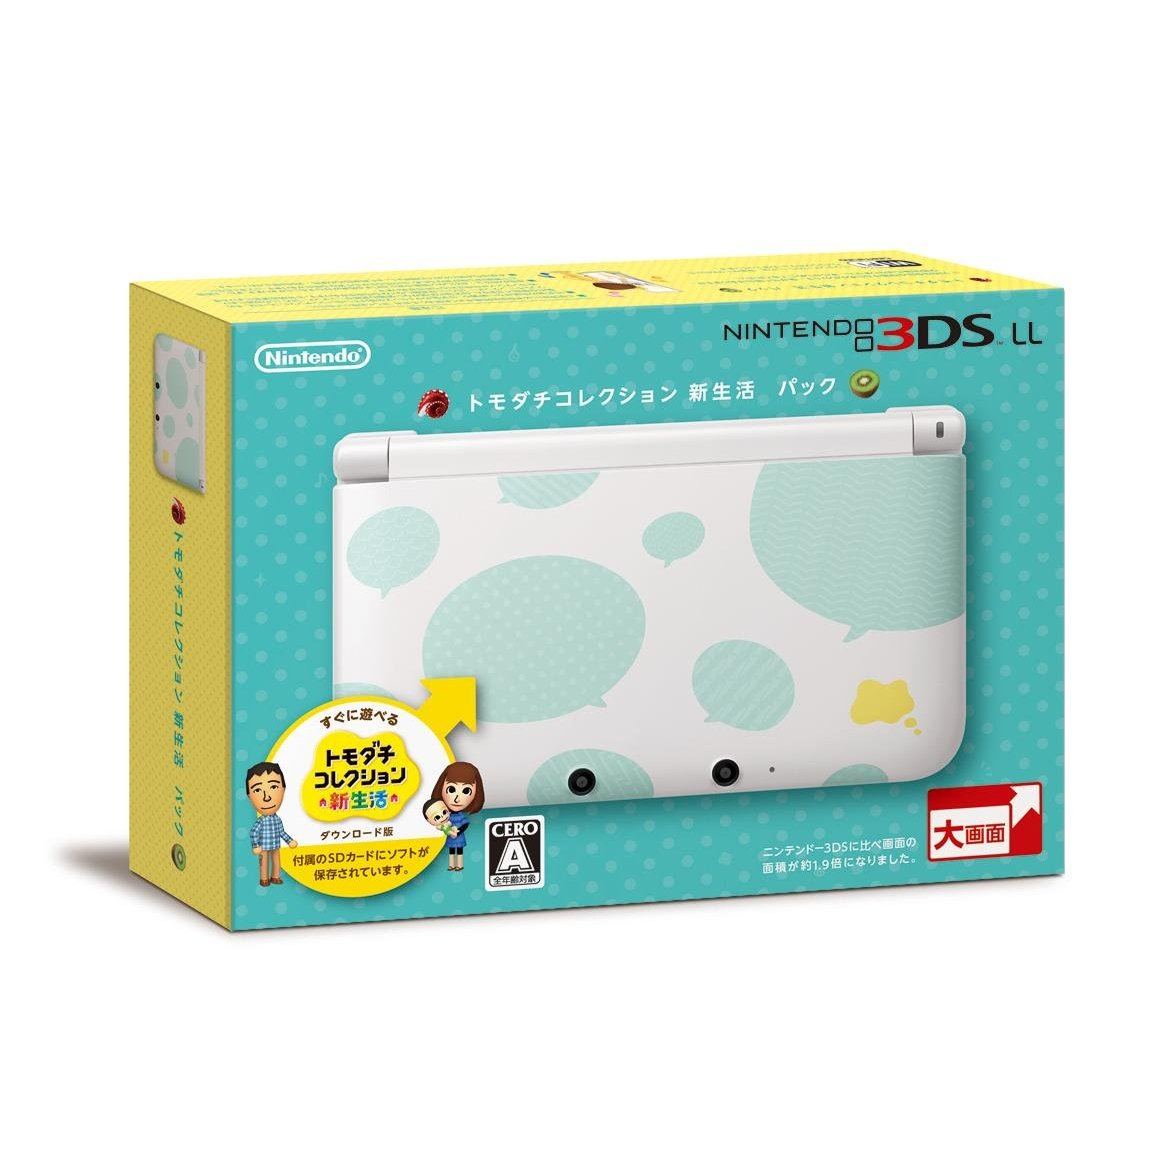 Nintendo 3ds Ll Tomodachi Collection Shin Seikatsu Pack Limited Edition